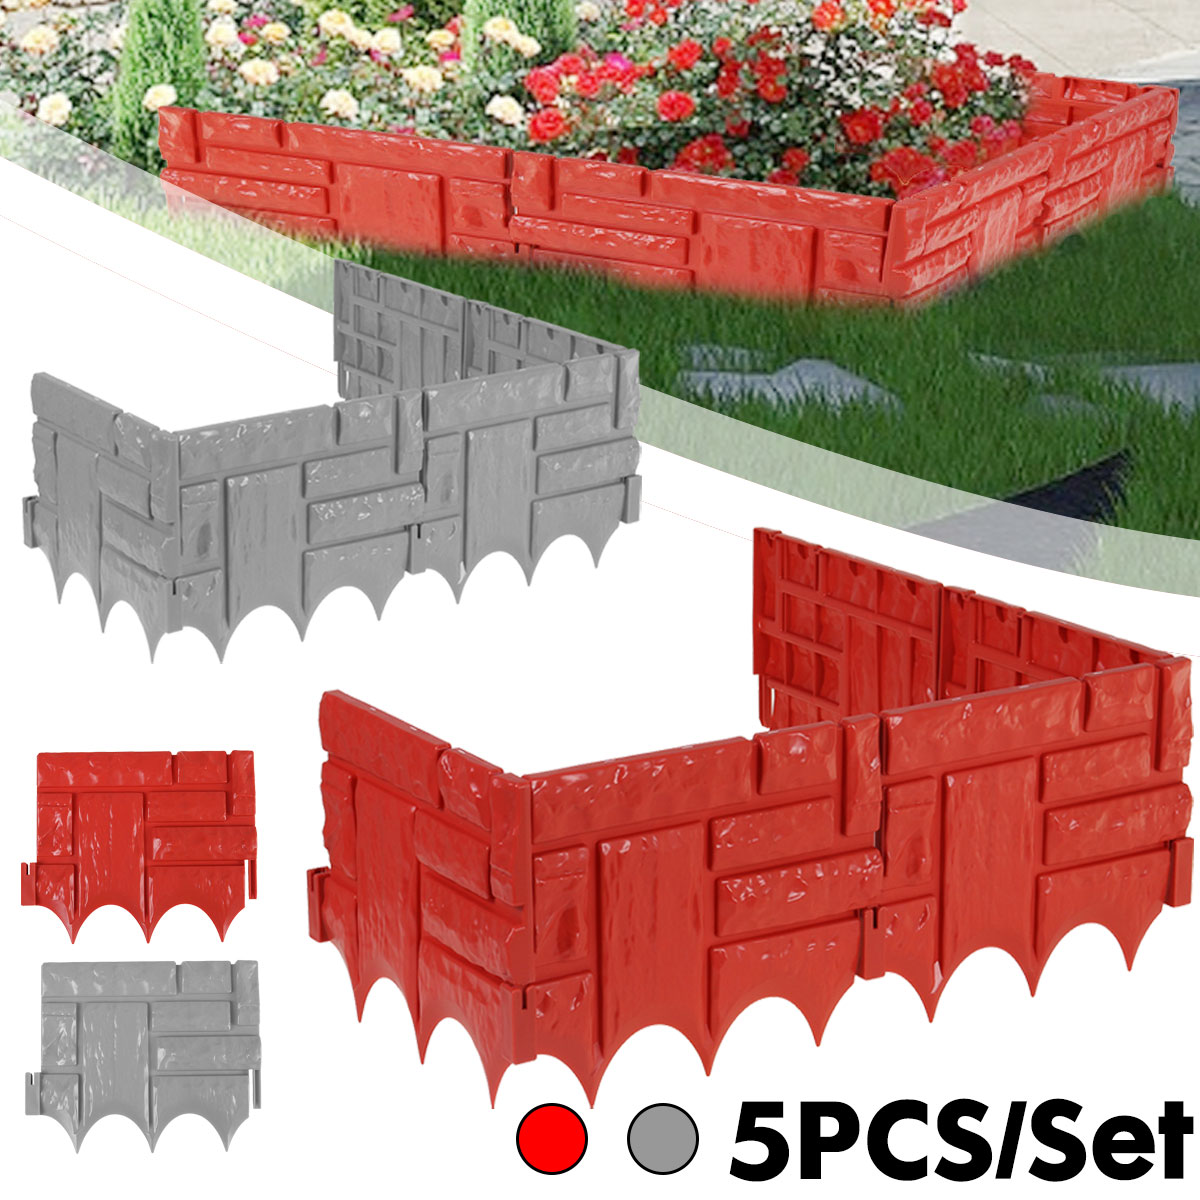 5PCS-Plastic-Garden-Fence-Panels-Garden-Fencing-Lawn-Edging-Plant-Border-Fence-1738338-1